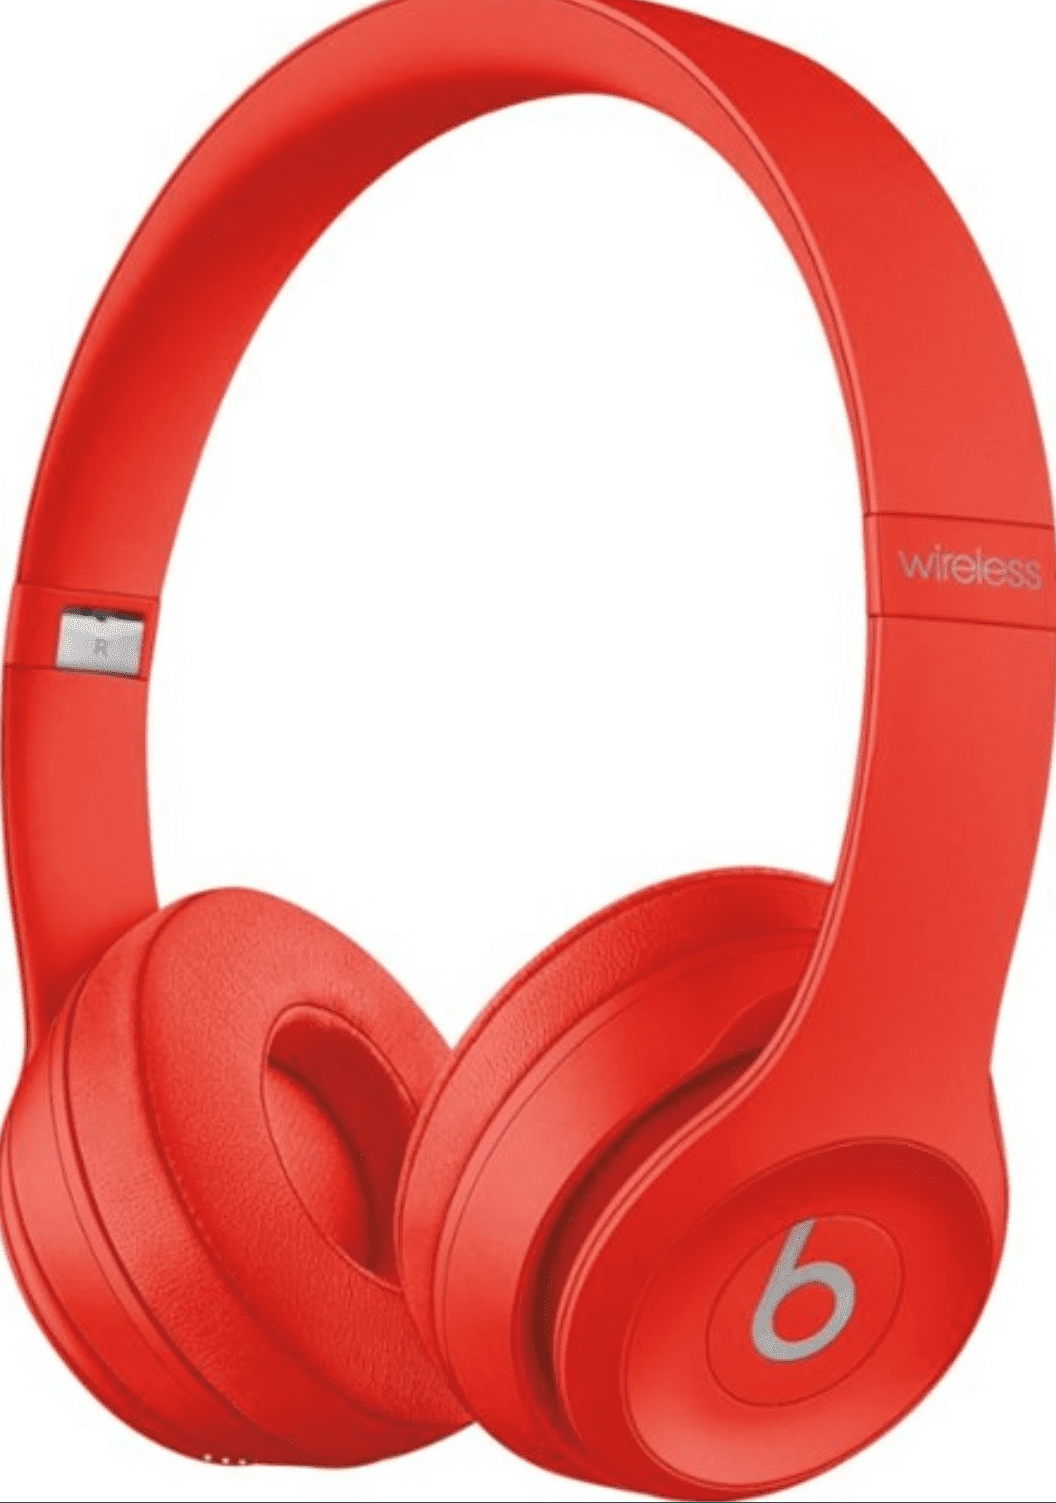 antage lobby Vil ikke Restored Beats by Dr. Dre - Solo 3 Wireless On-Ear Headphones - Citrus Red  MX472LL/A (Refurbished) - Walmart.com